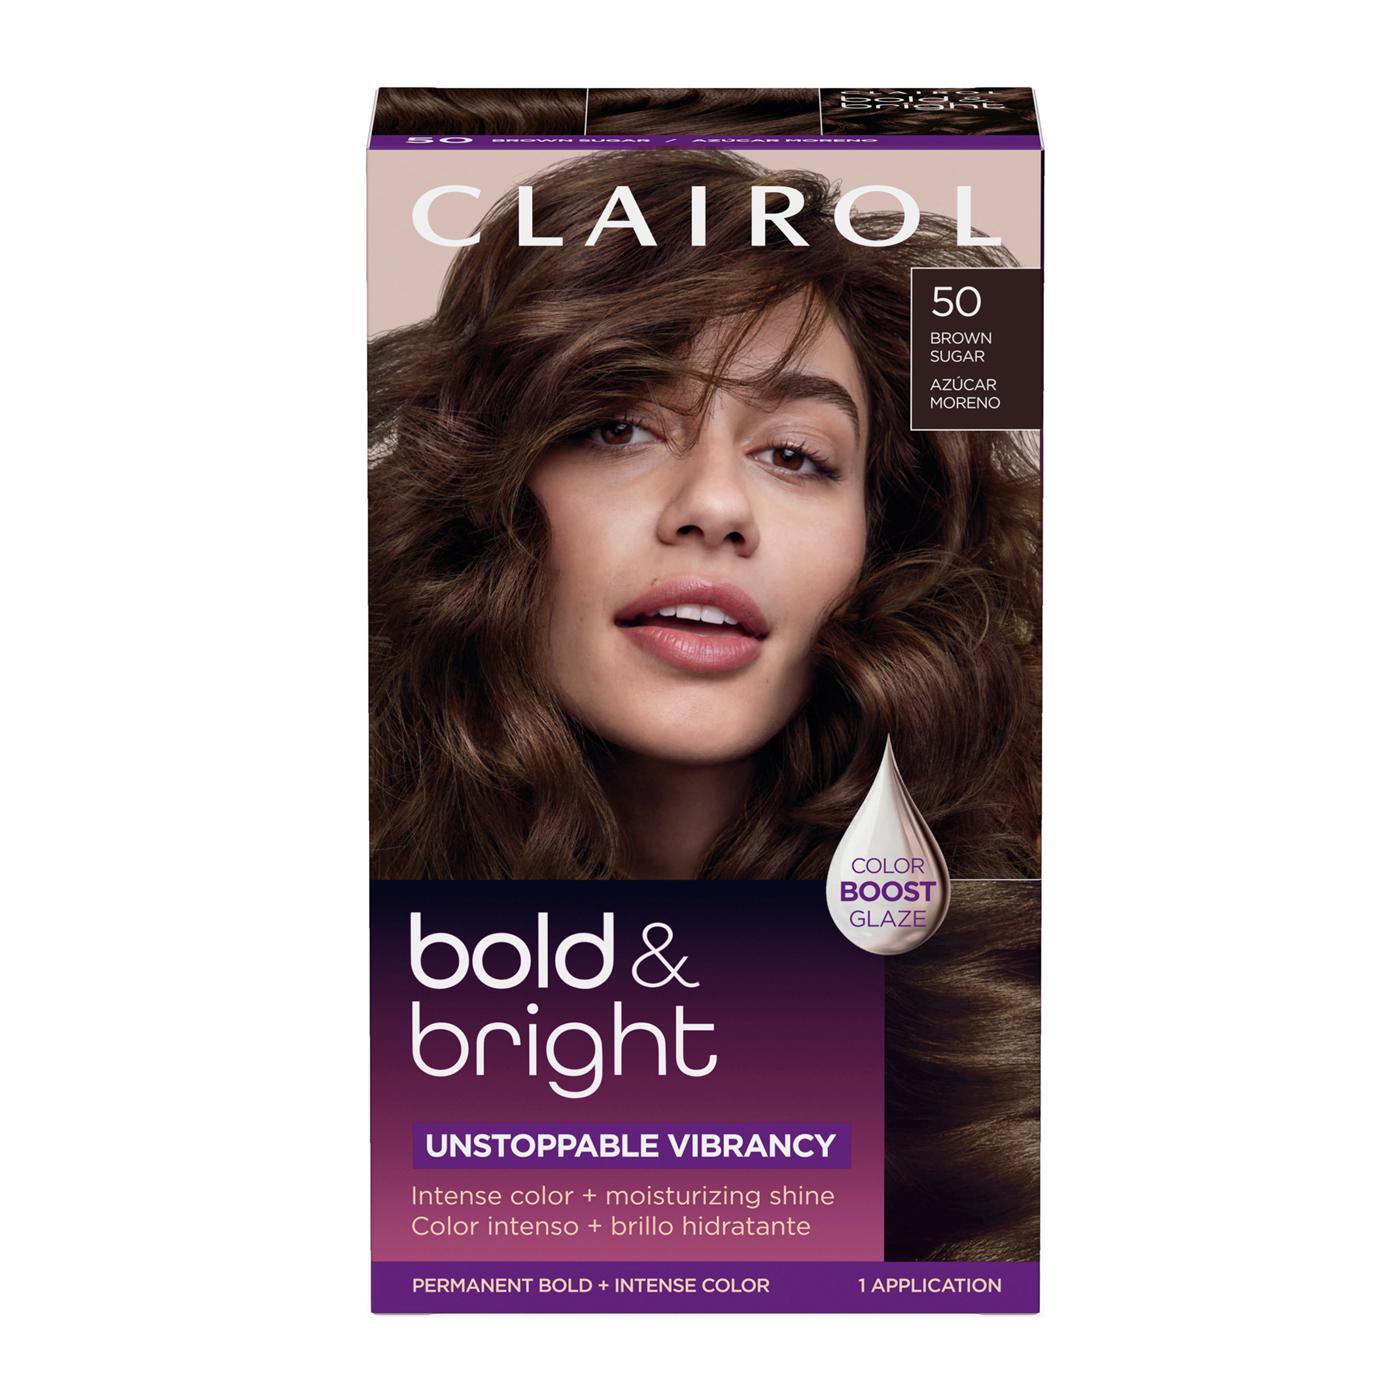 Clairol Bold & Bright Permanent Hair Color - 50 Brown Sugar; image 1 of 11